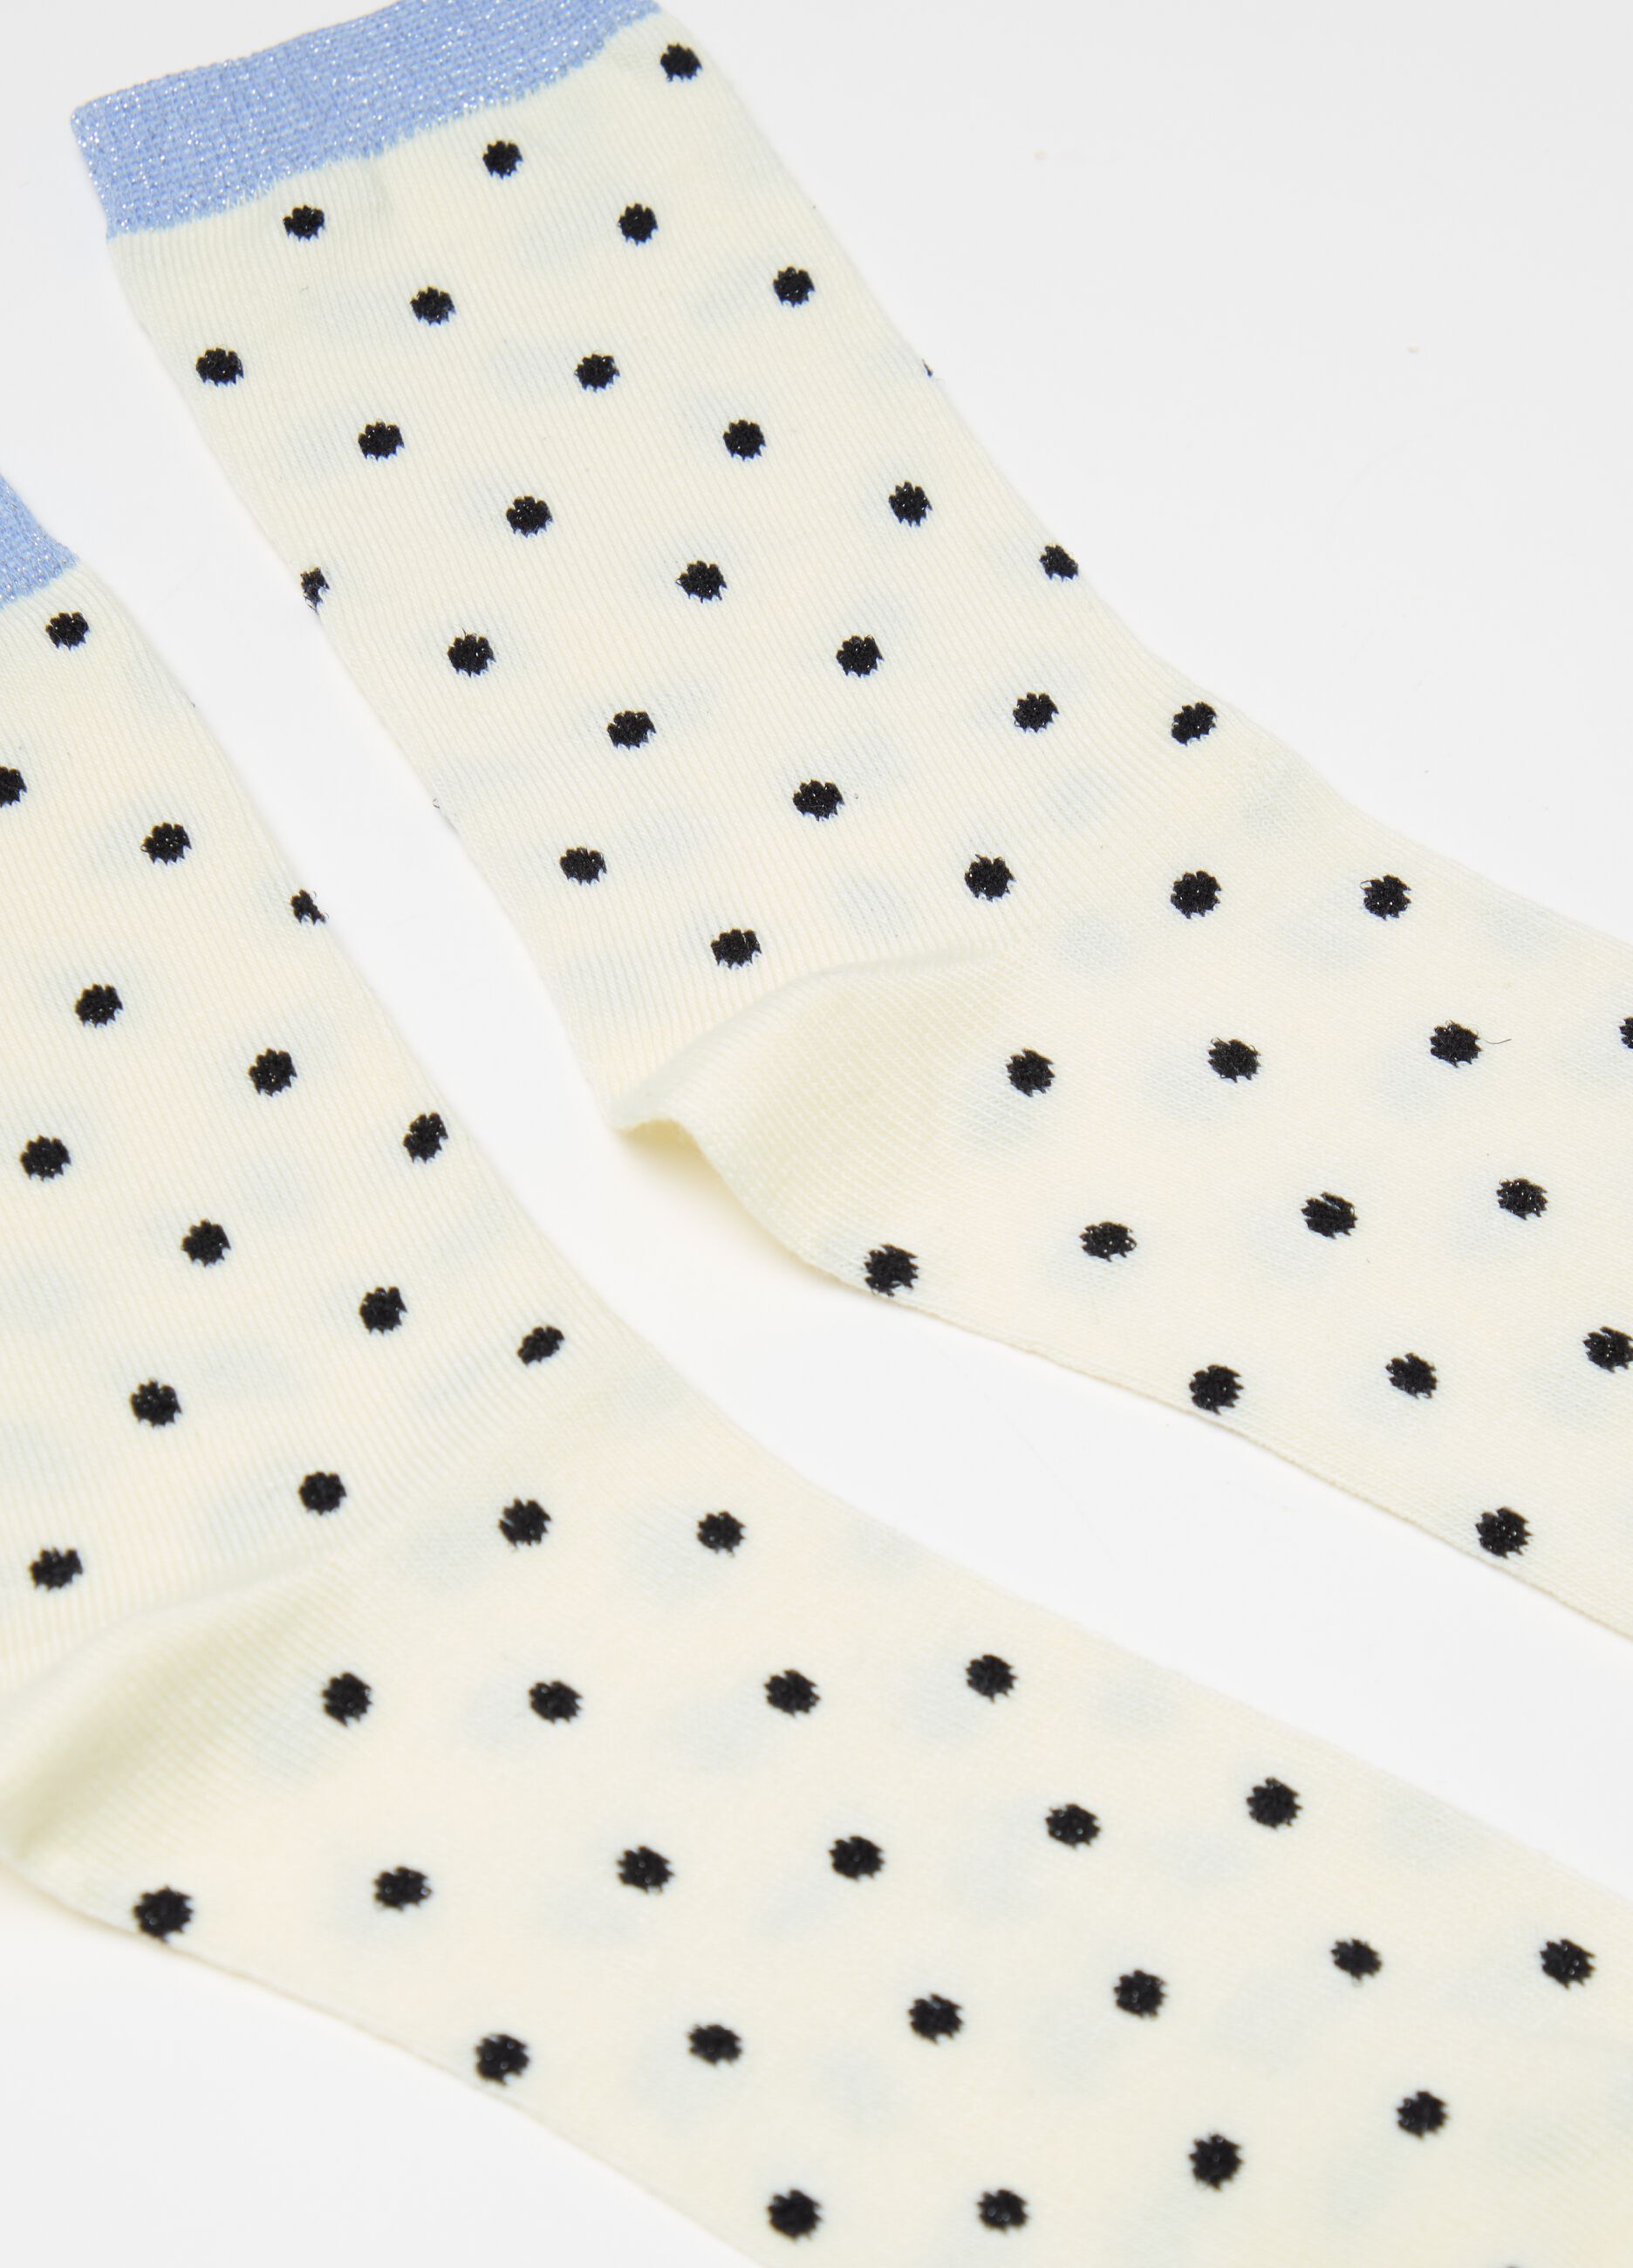 Three-pack polka dot socks with lurex